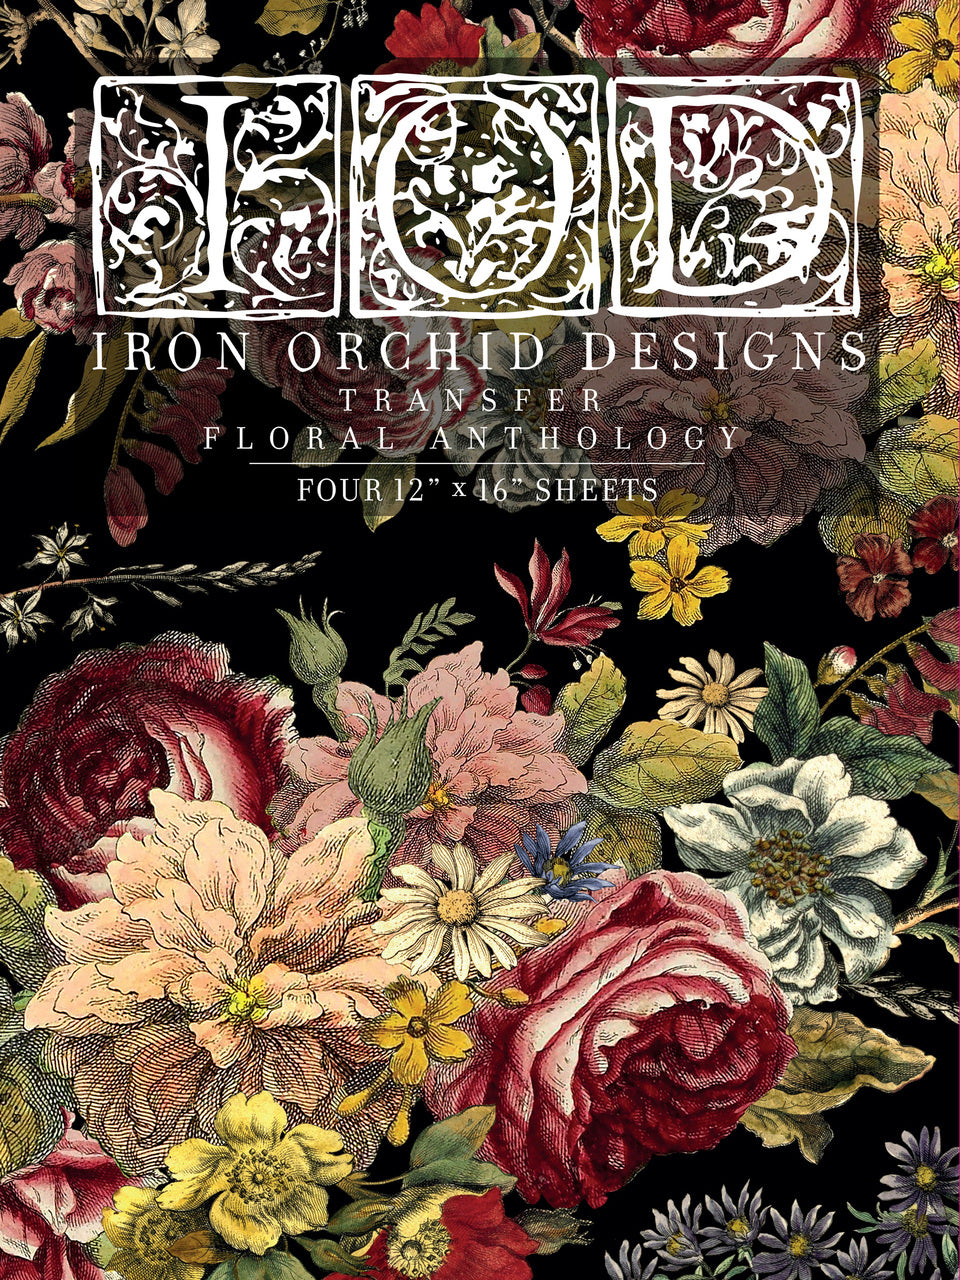 Floral Anthology IOD Transfer, Front Packaging